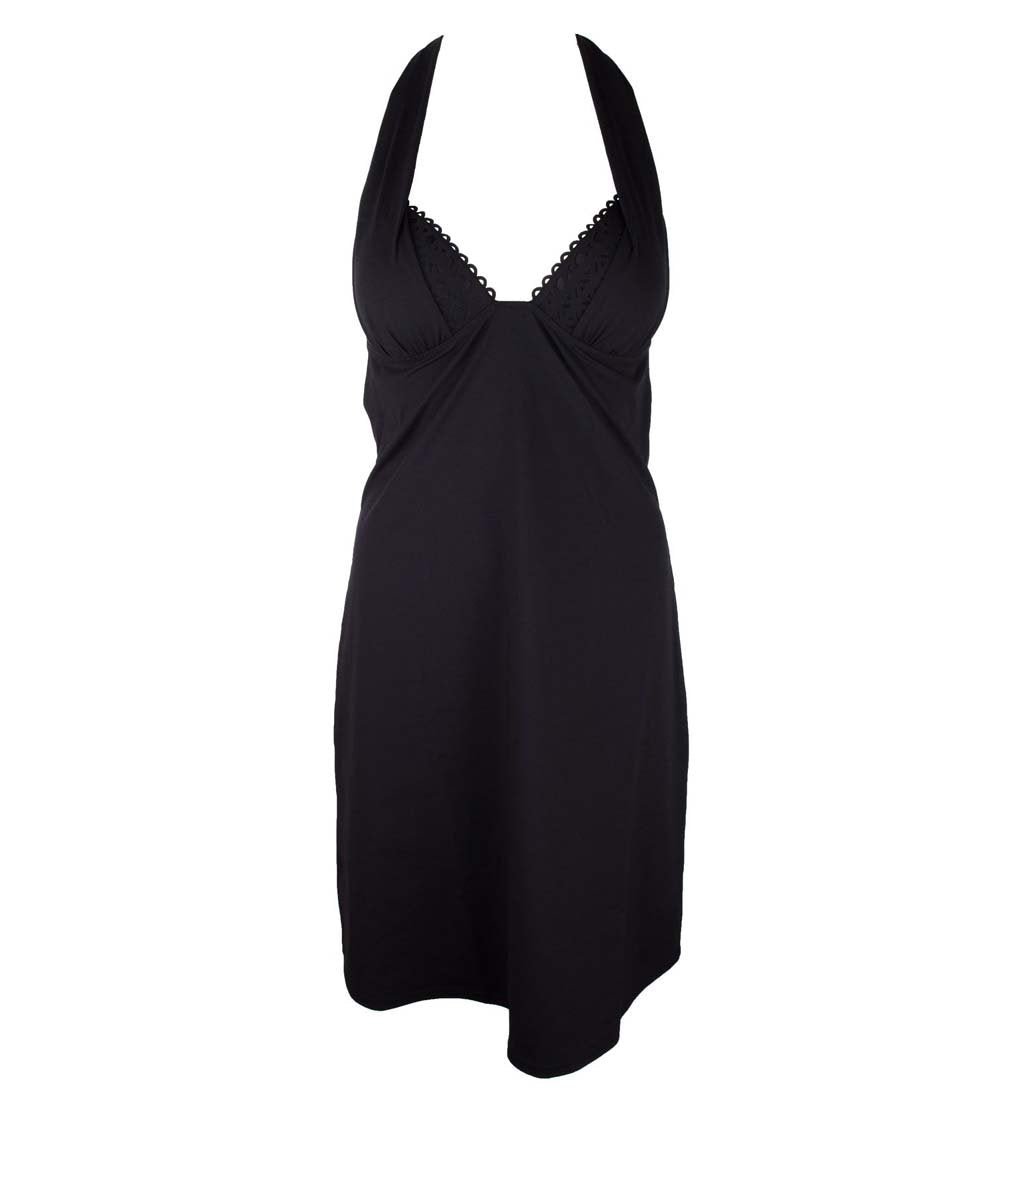 Lise Charmel 'Ajourage Couture' (Black) Dress - Sandra Dee - Product Shot - Front